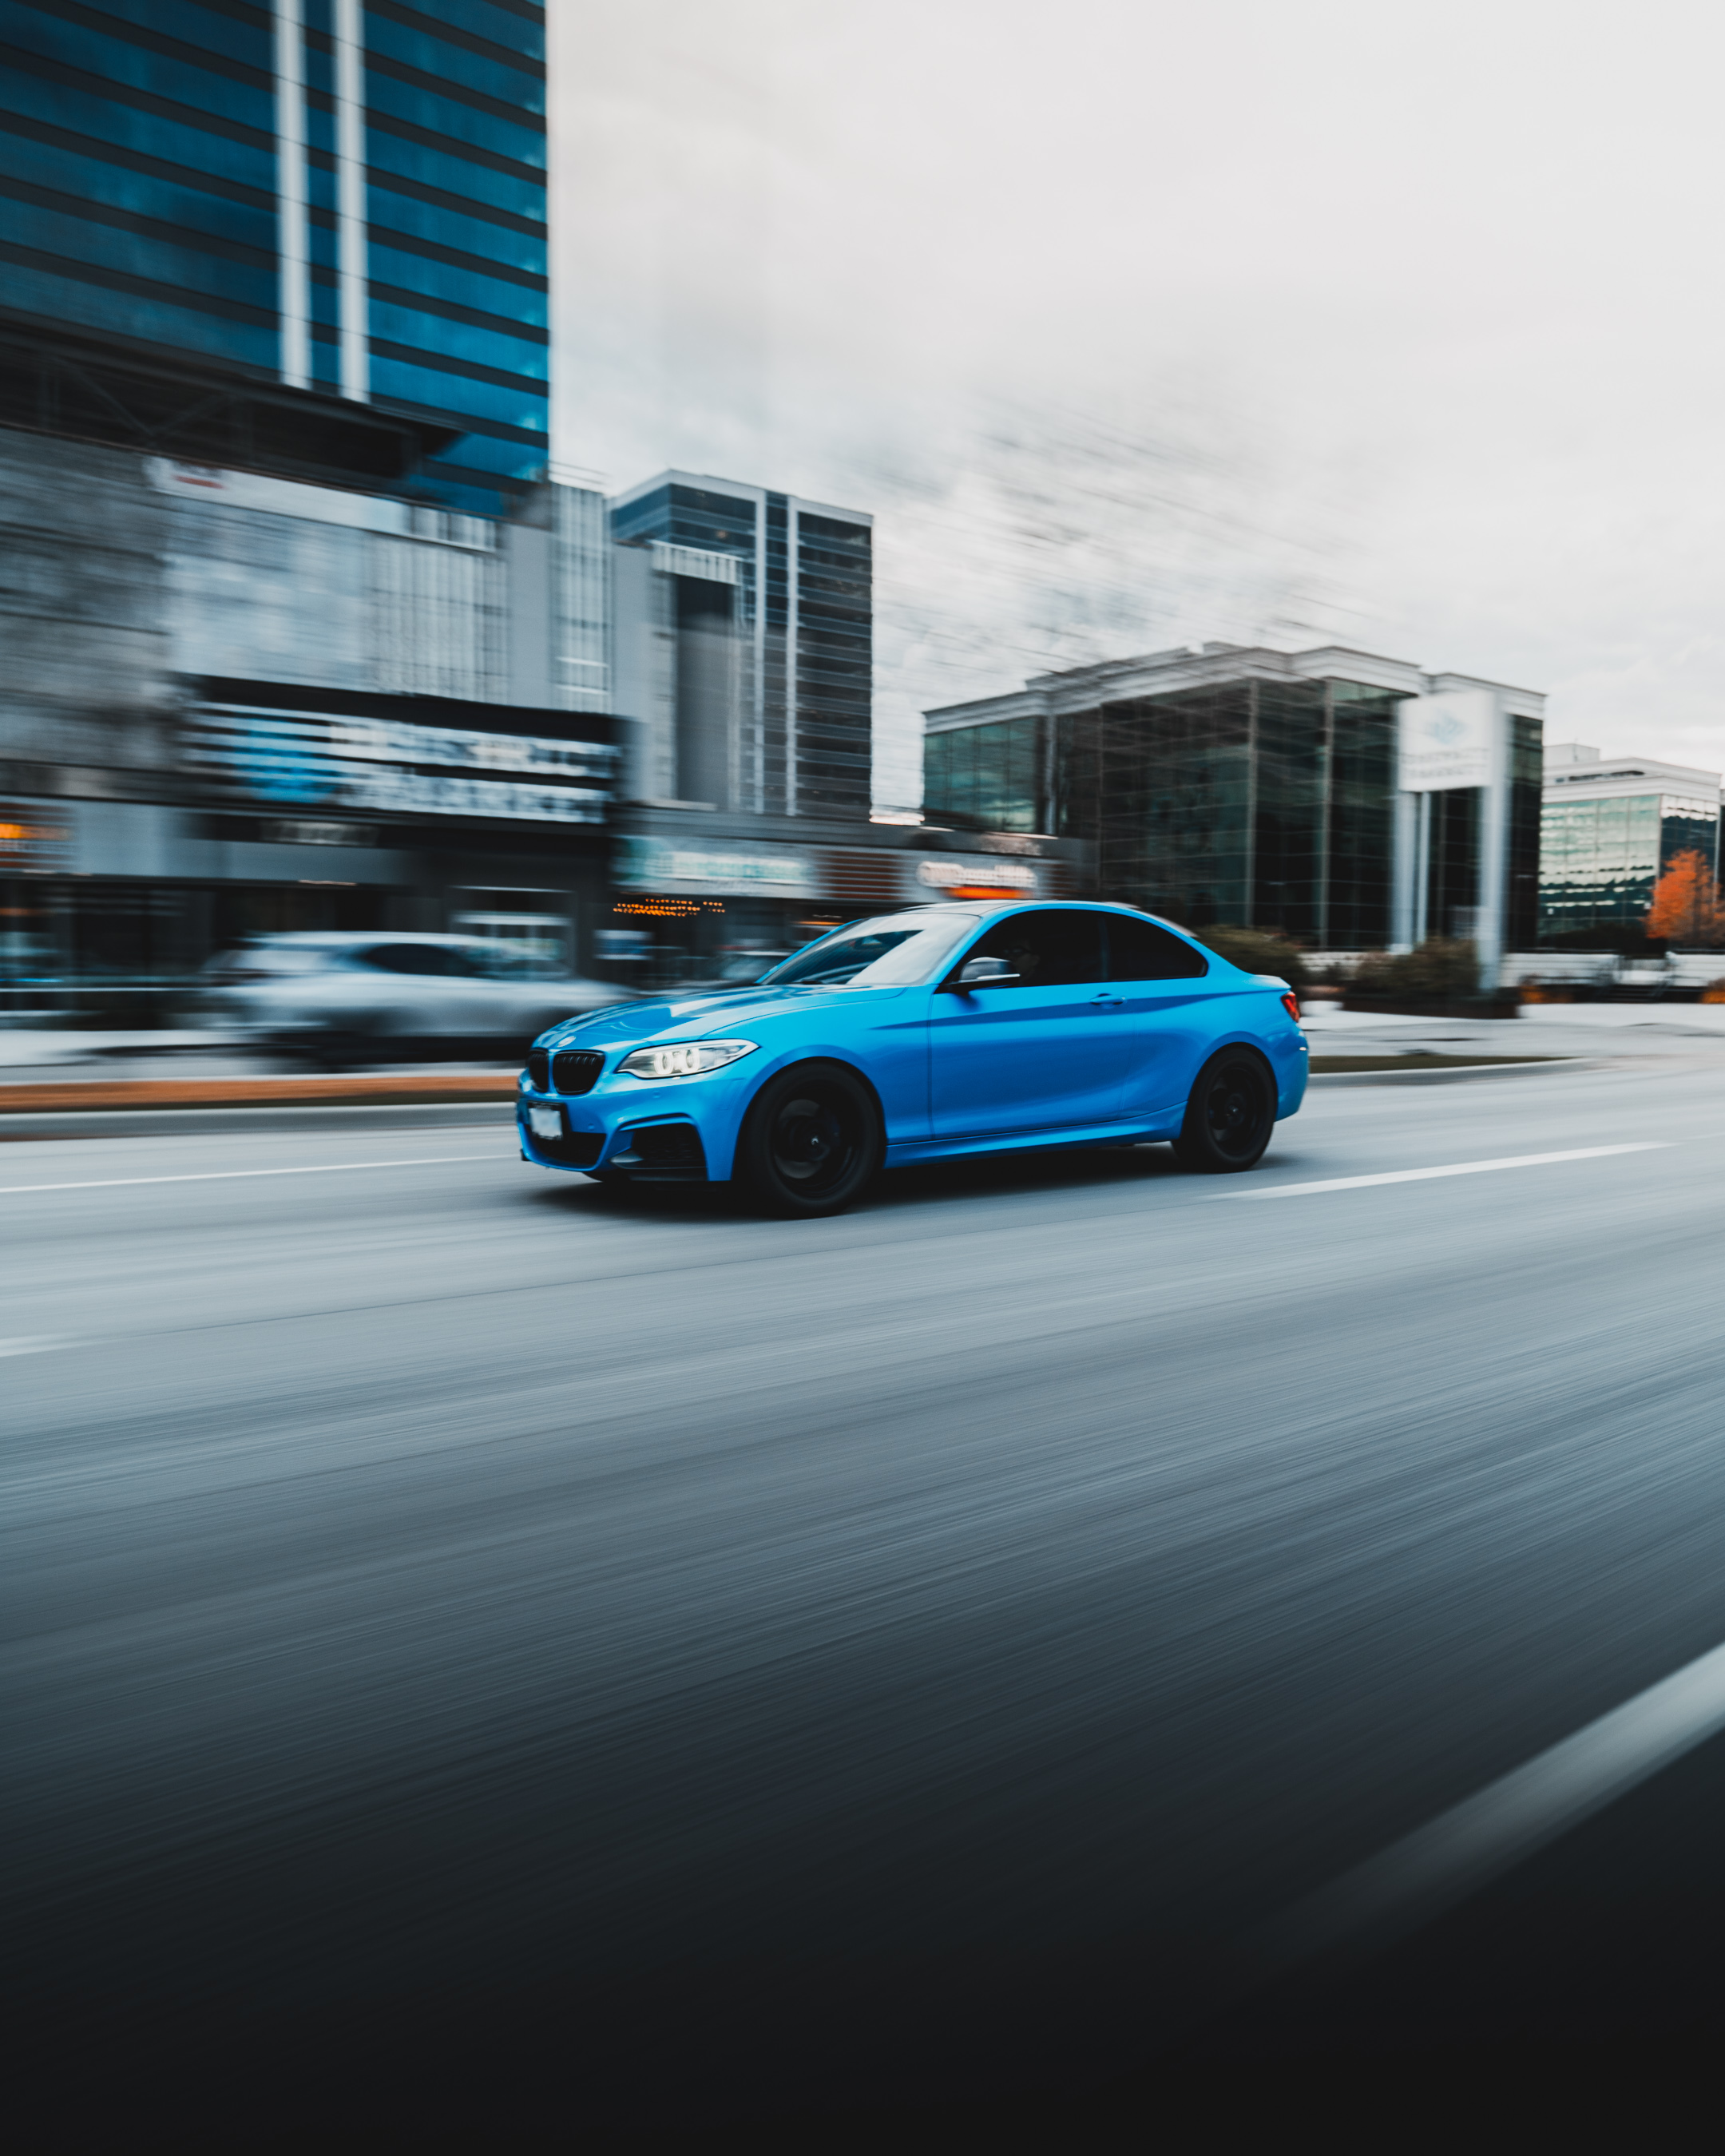 2016 Blue BMW 2 series front driving Kelowna fall